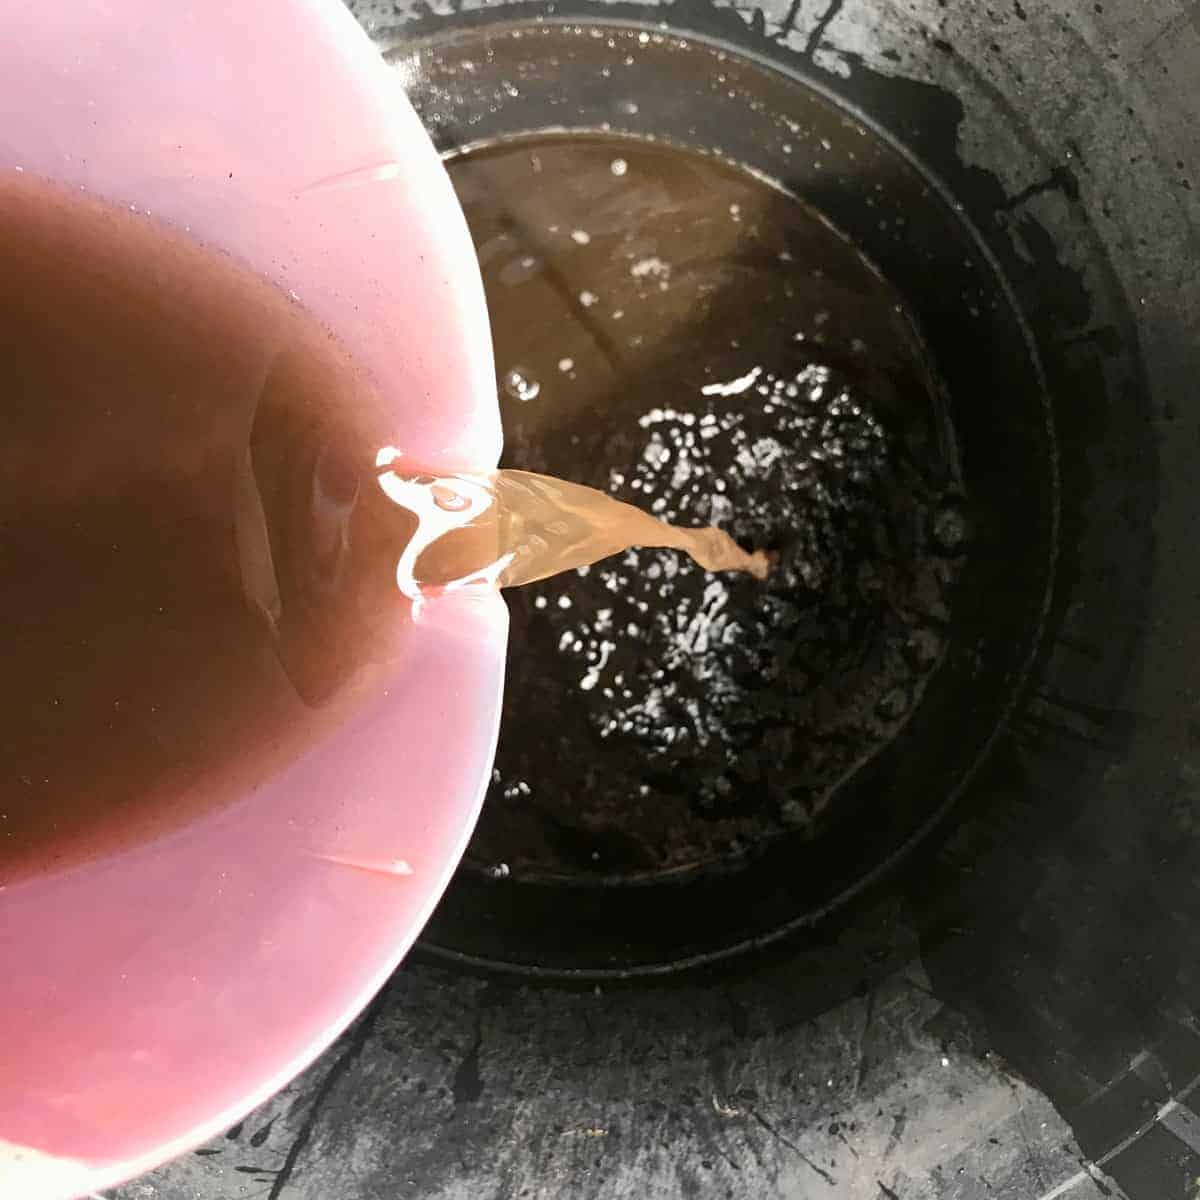 How to Make Worm Tea - The Daring Gourmet